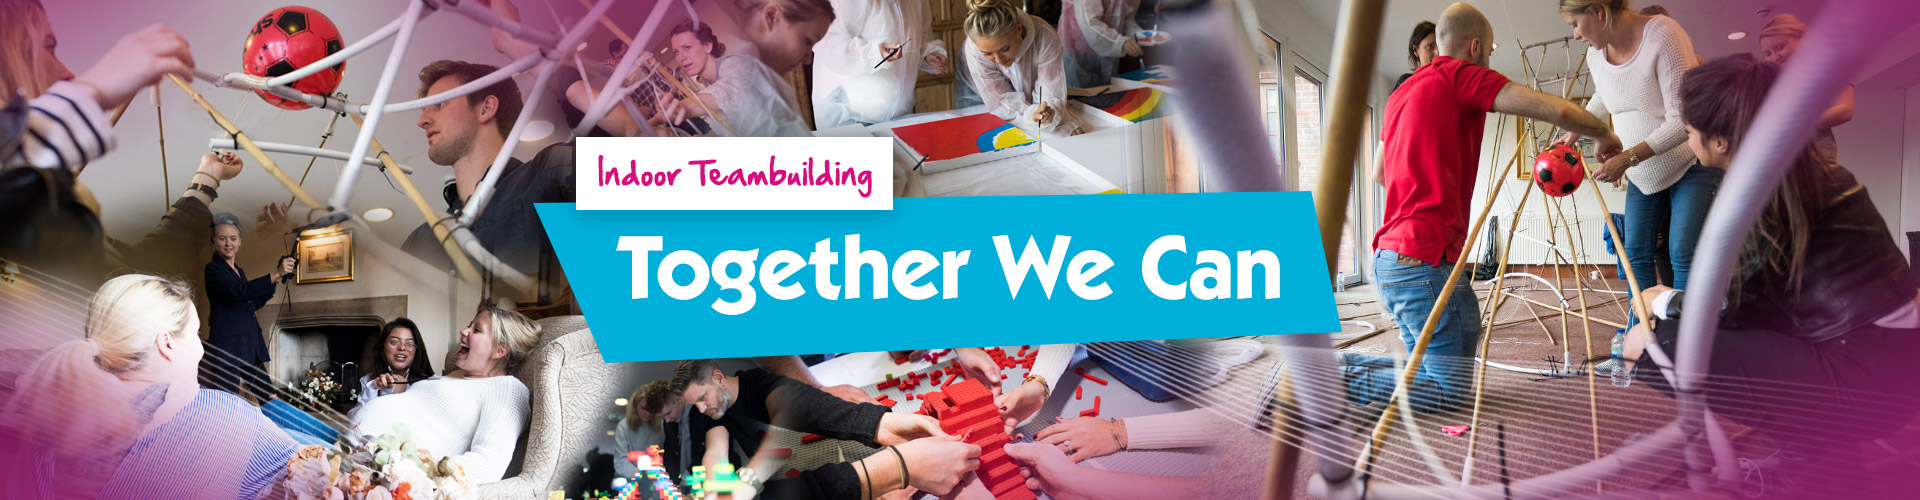 Teambuilding | Together We Can